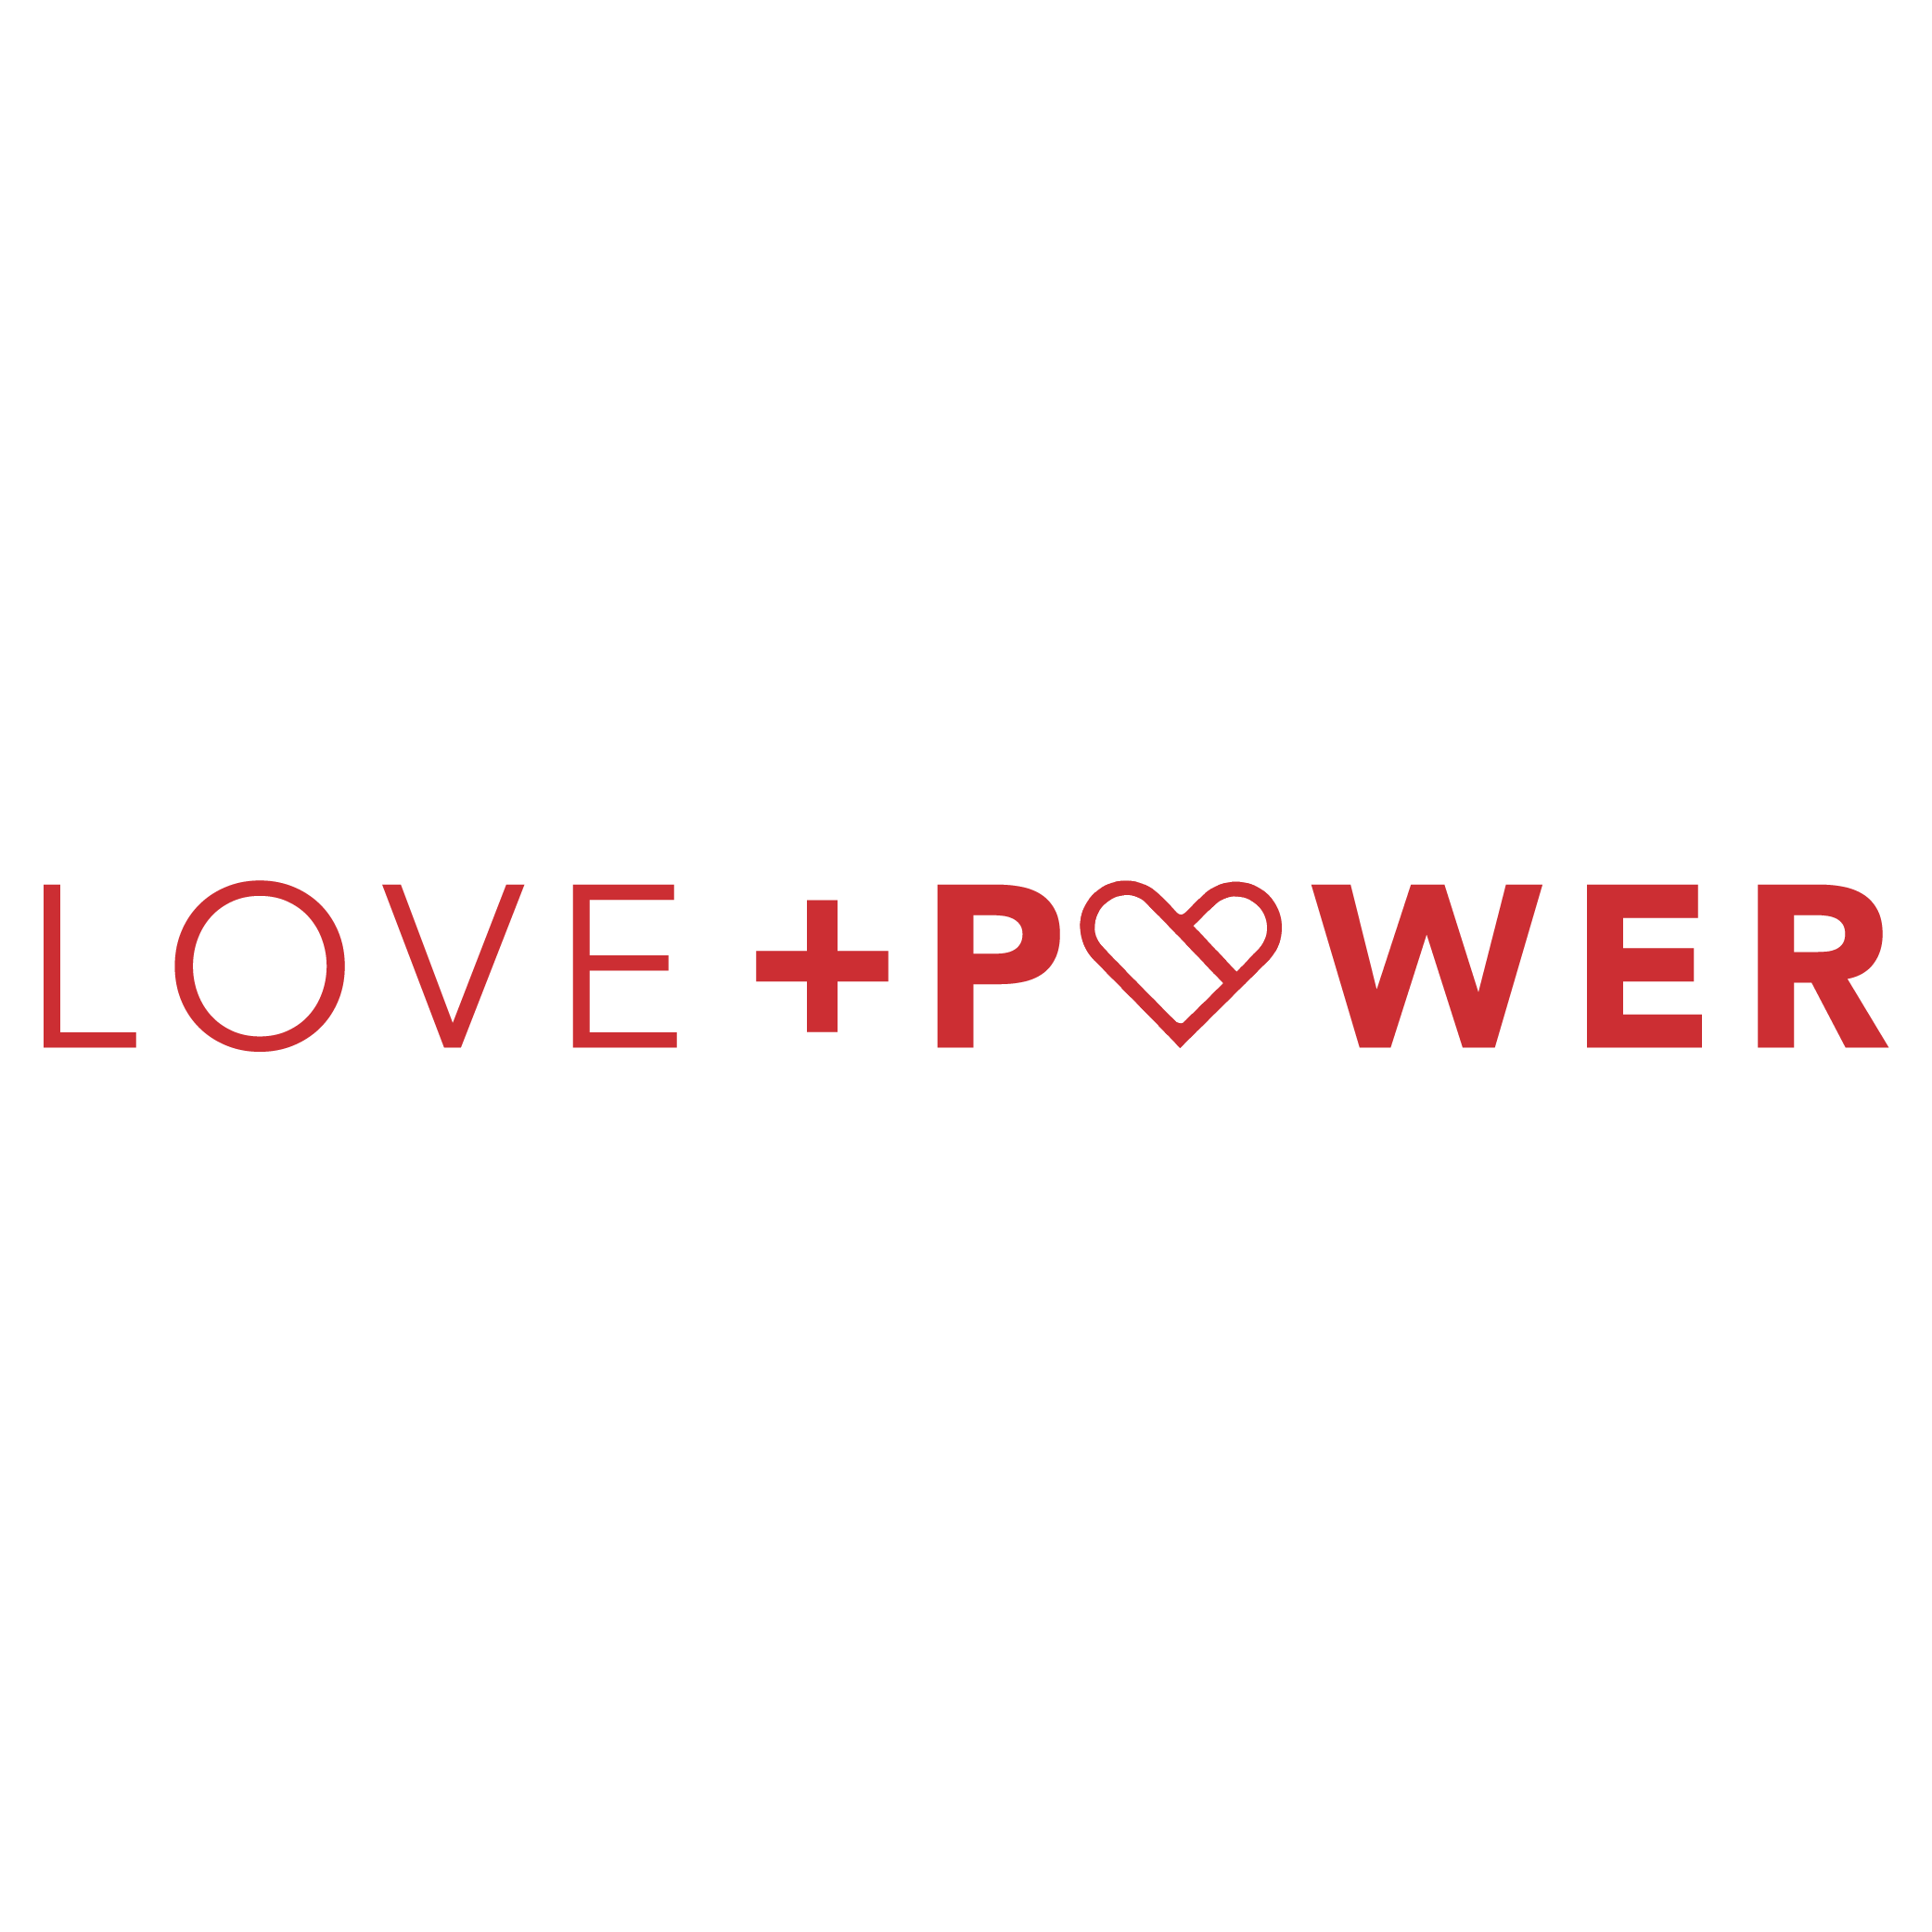 LOVE + POWER